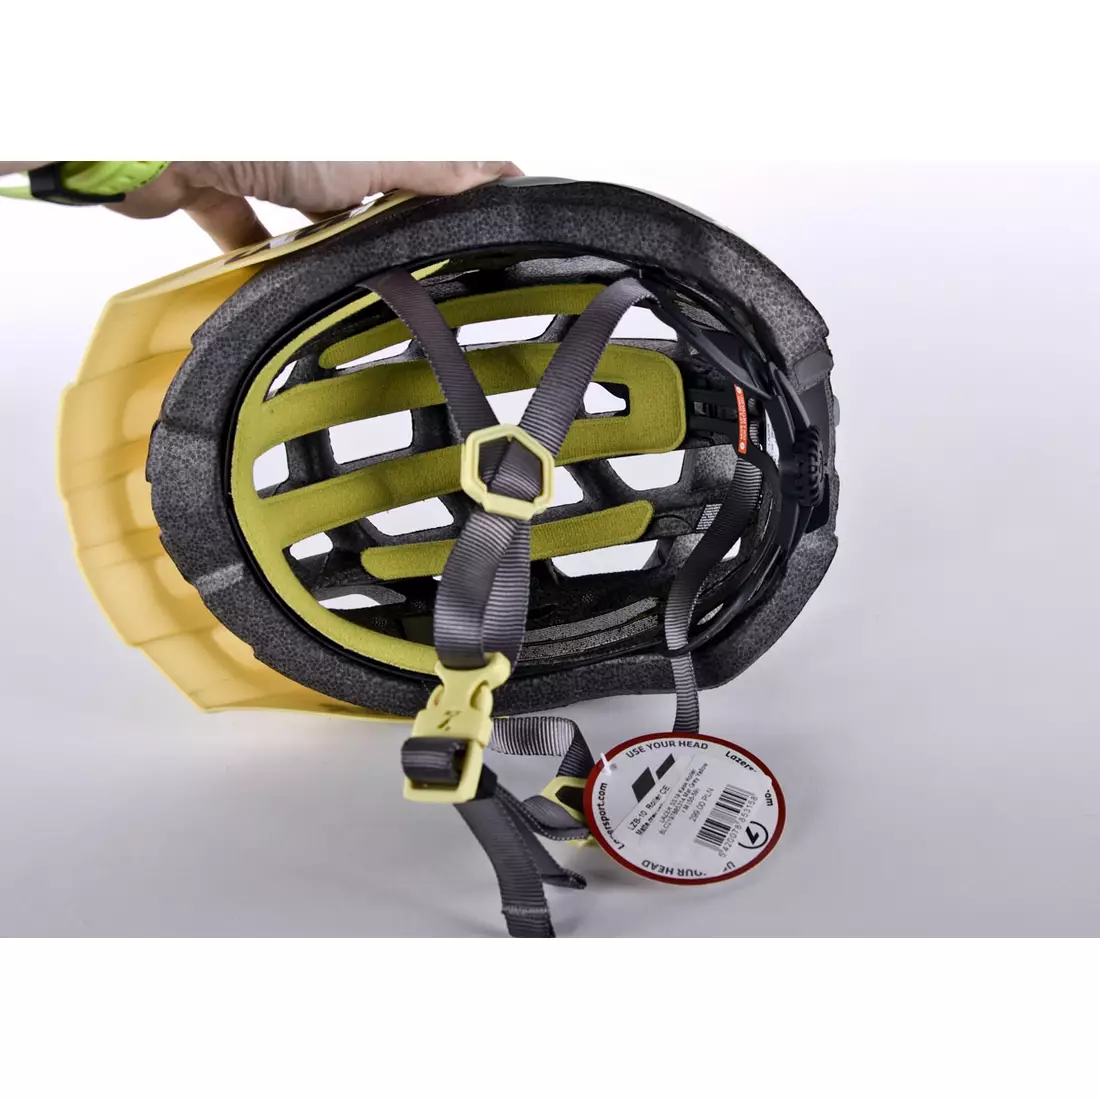 MTB cyklistická přilba LAZER ROLLER TS+ matná šedá žlutá